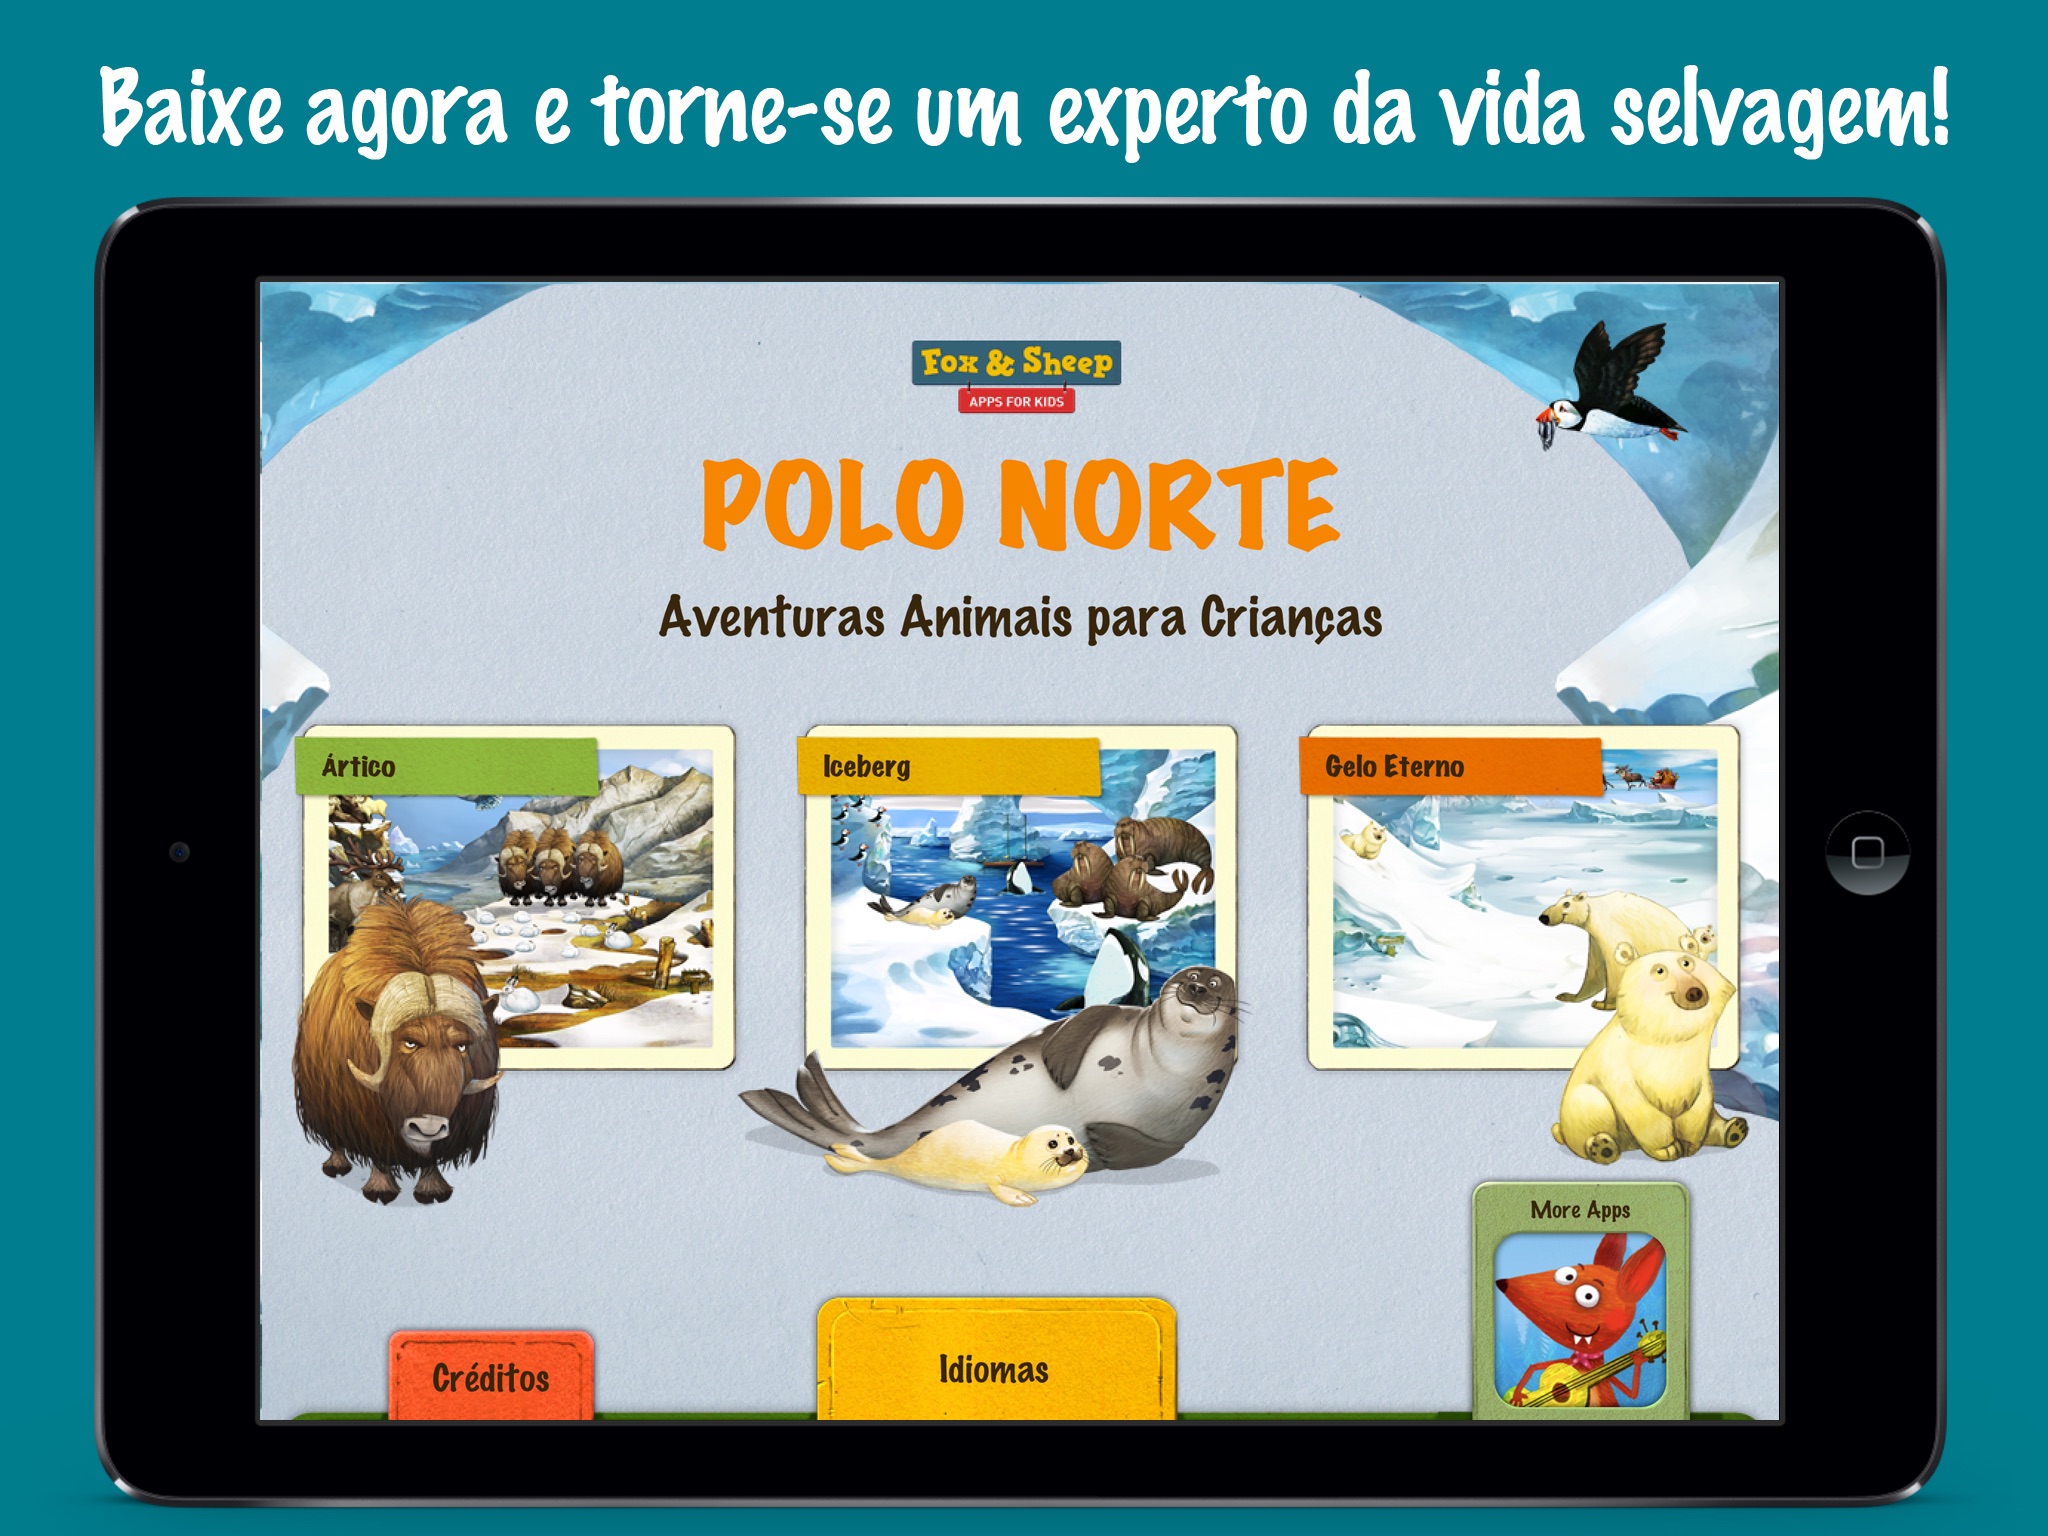 North Pole - Animal Adventures for Kids screenshot 4